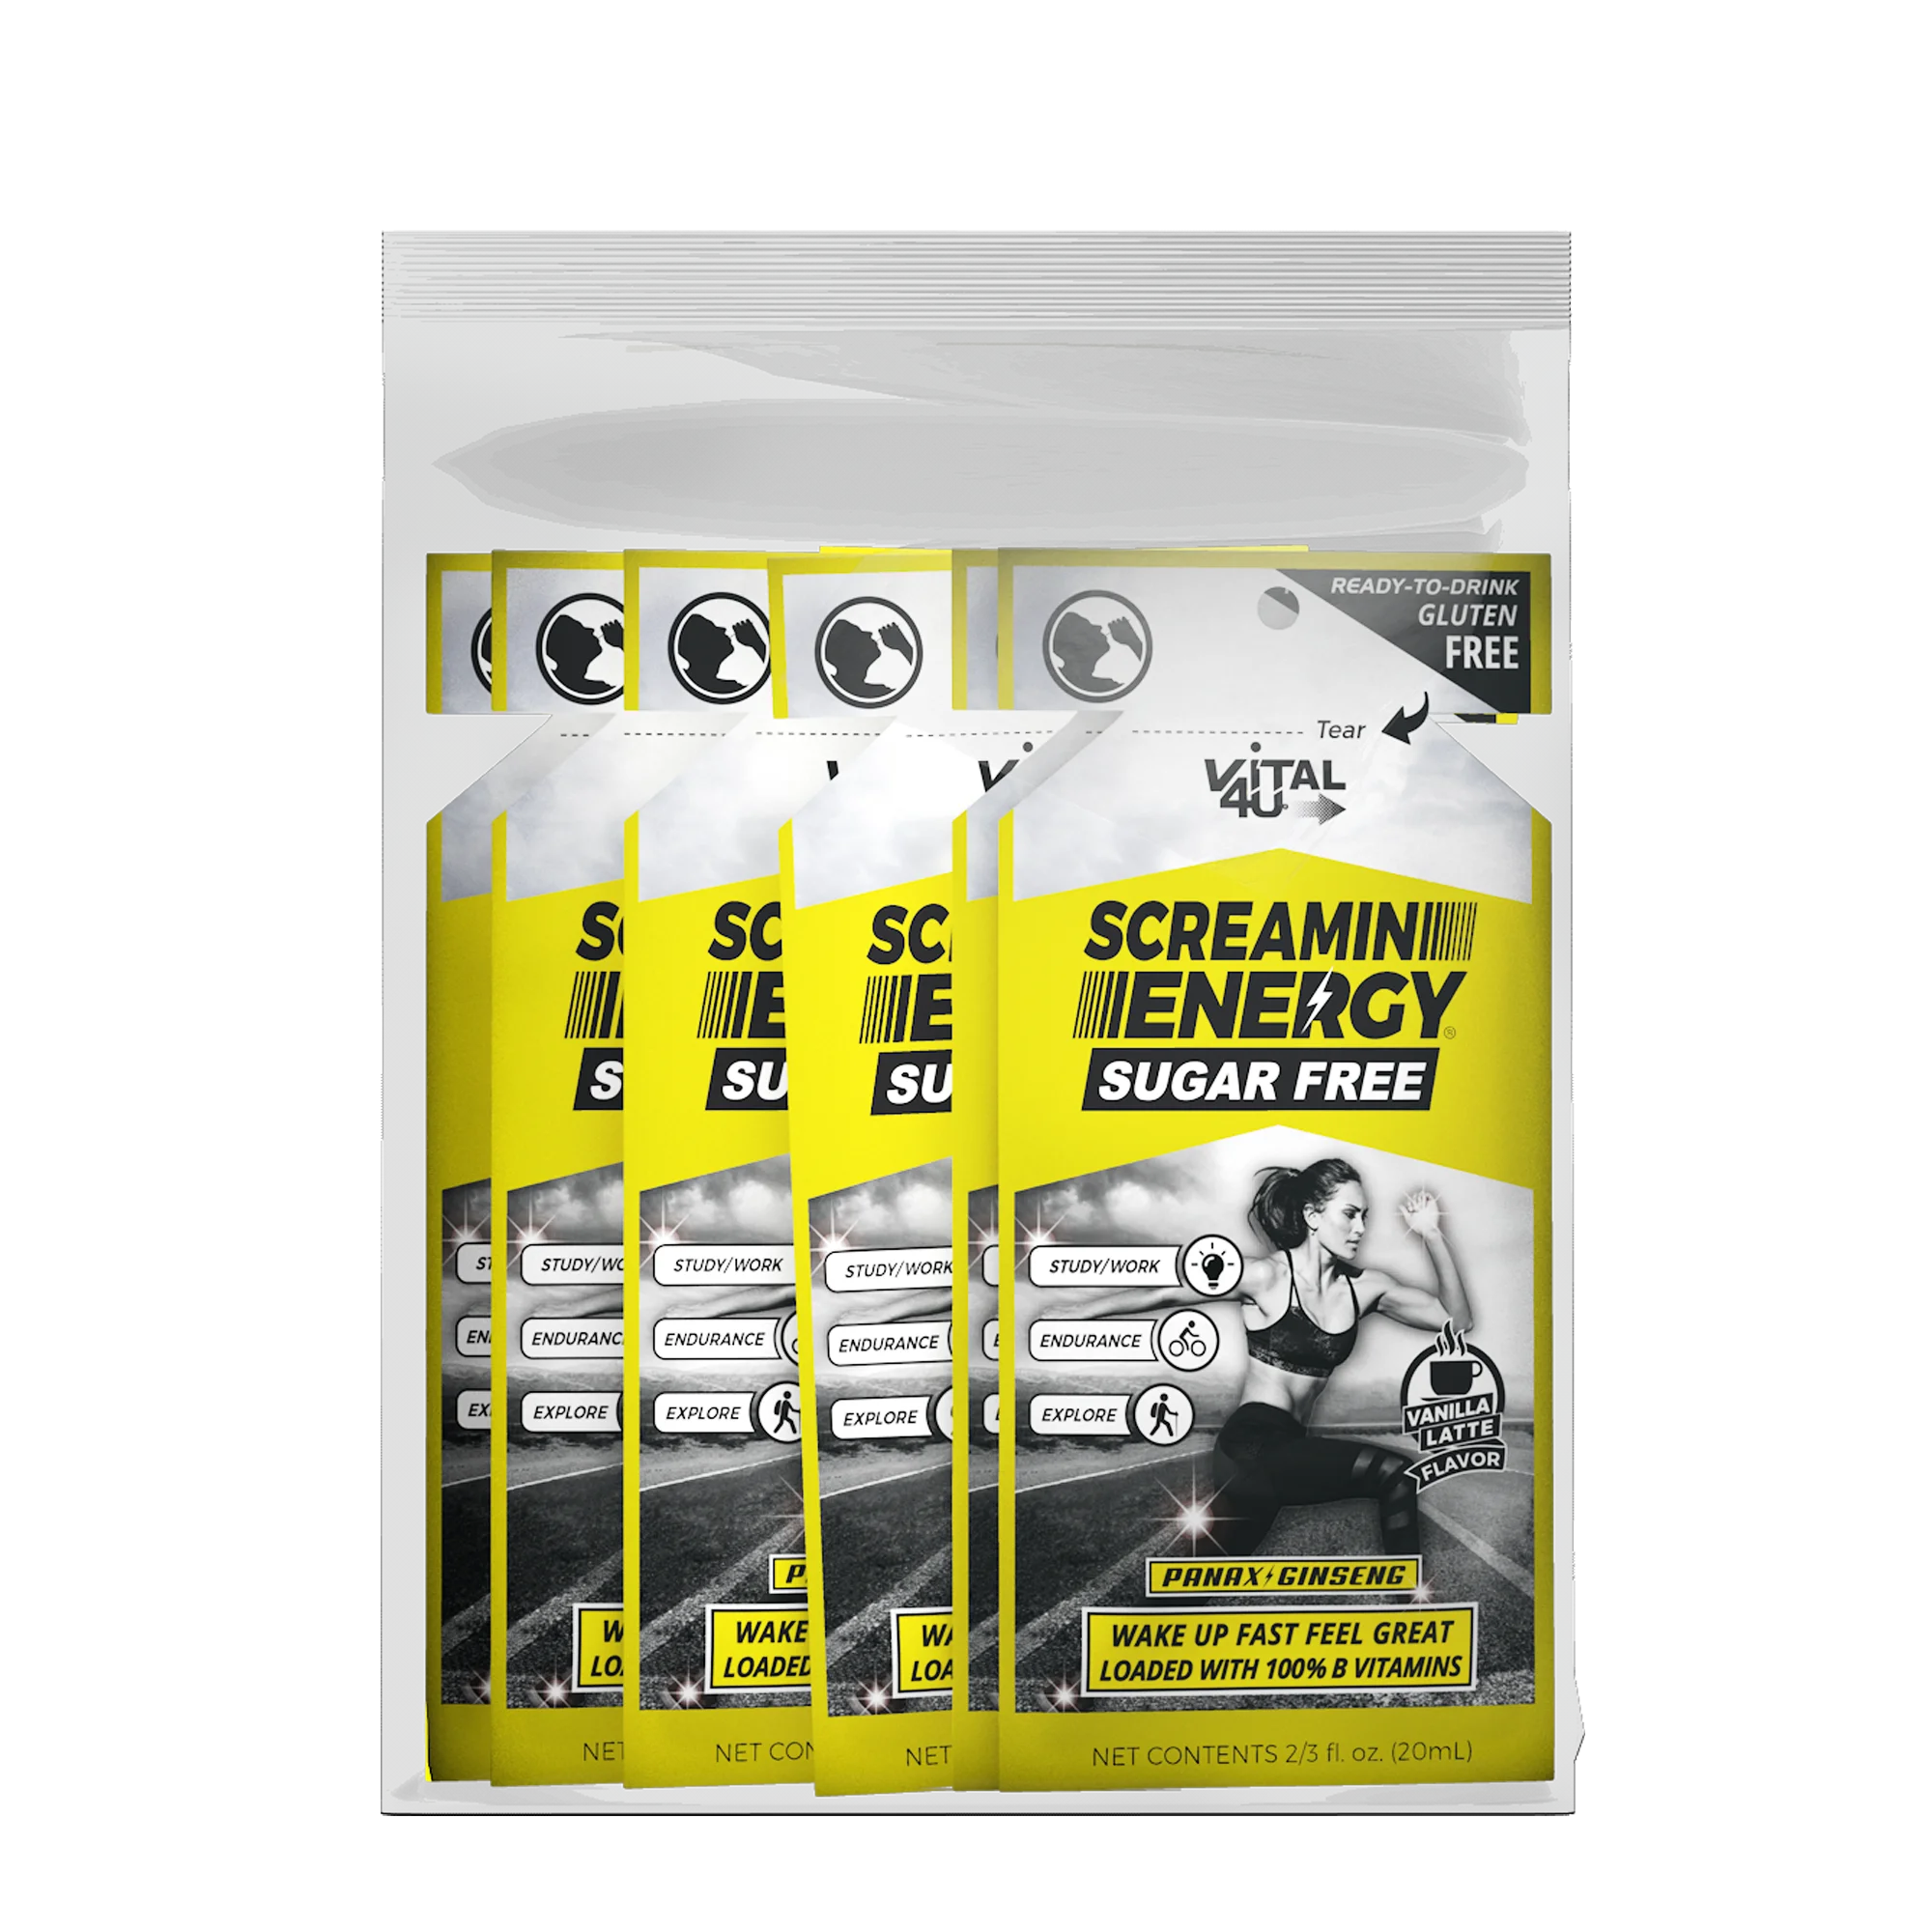 Screamin Energy Sugar Free Vanilla Latte Flavor Clear Bag Basic Packaging 12ct